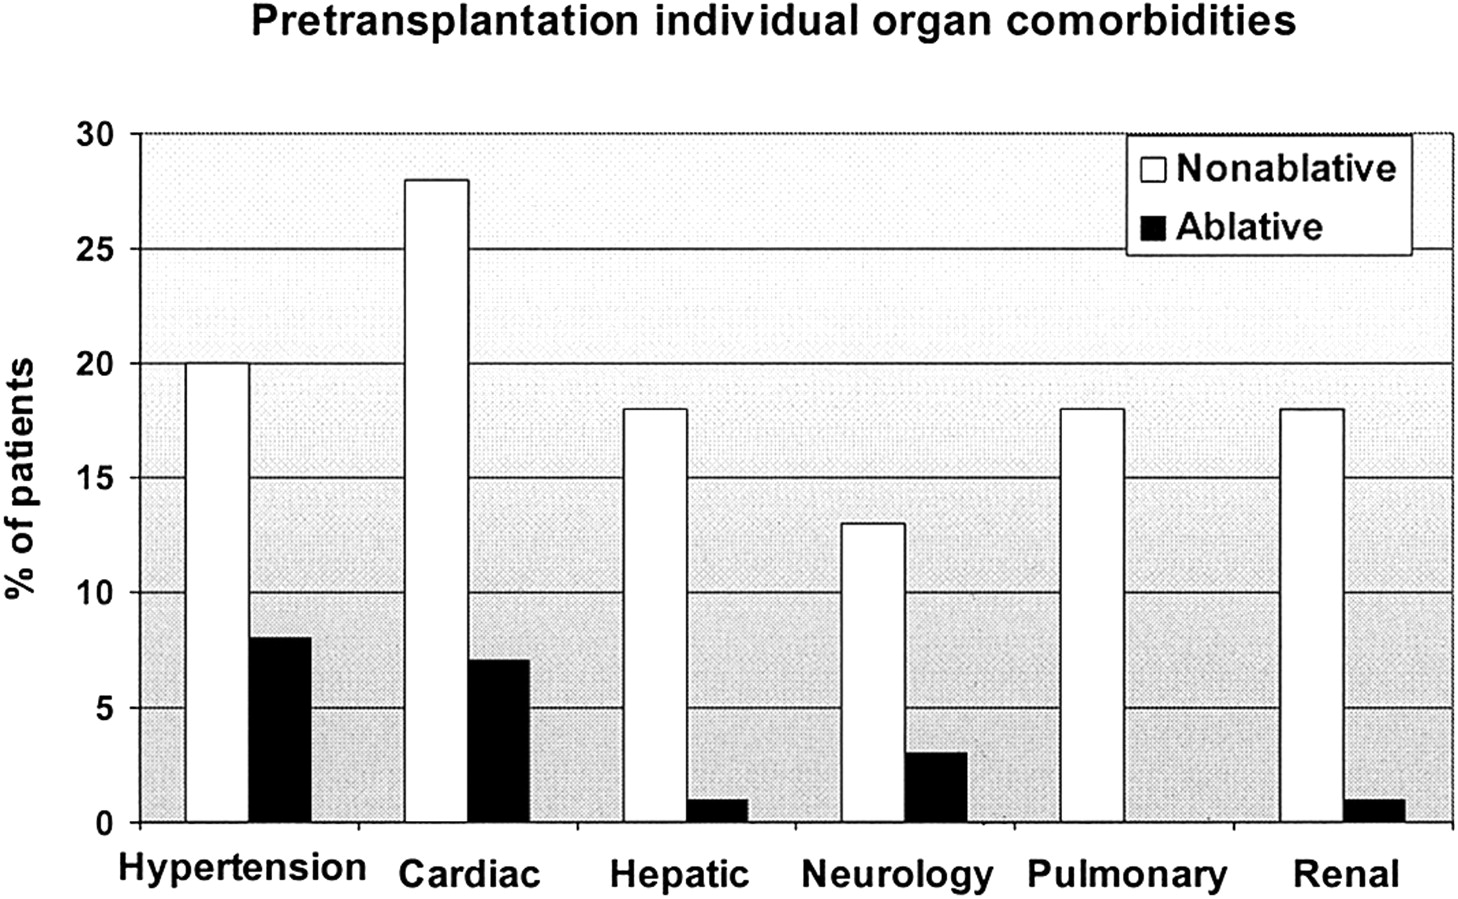 Comparison of pretransplantation individual organ comorbidities between nonablative and ablative patients Comparing morbidity and mortality of HLA-matched unrelated donor